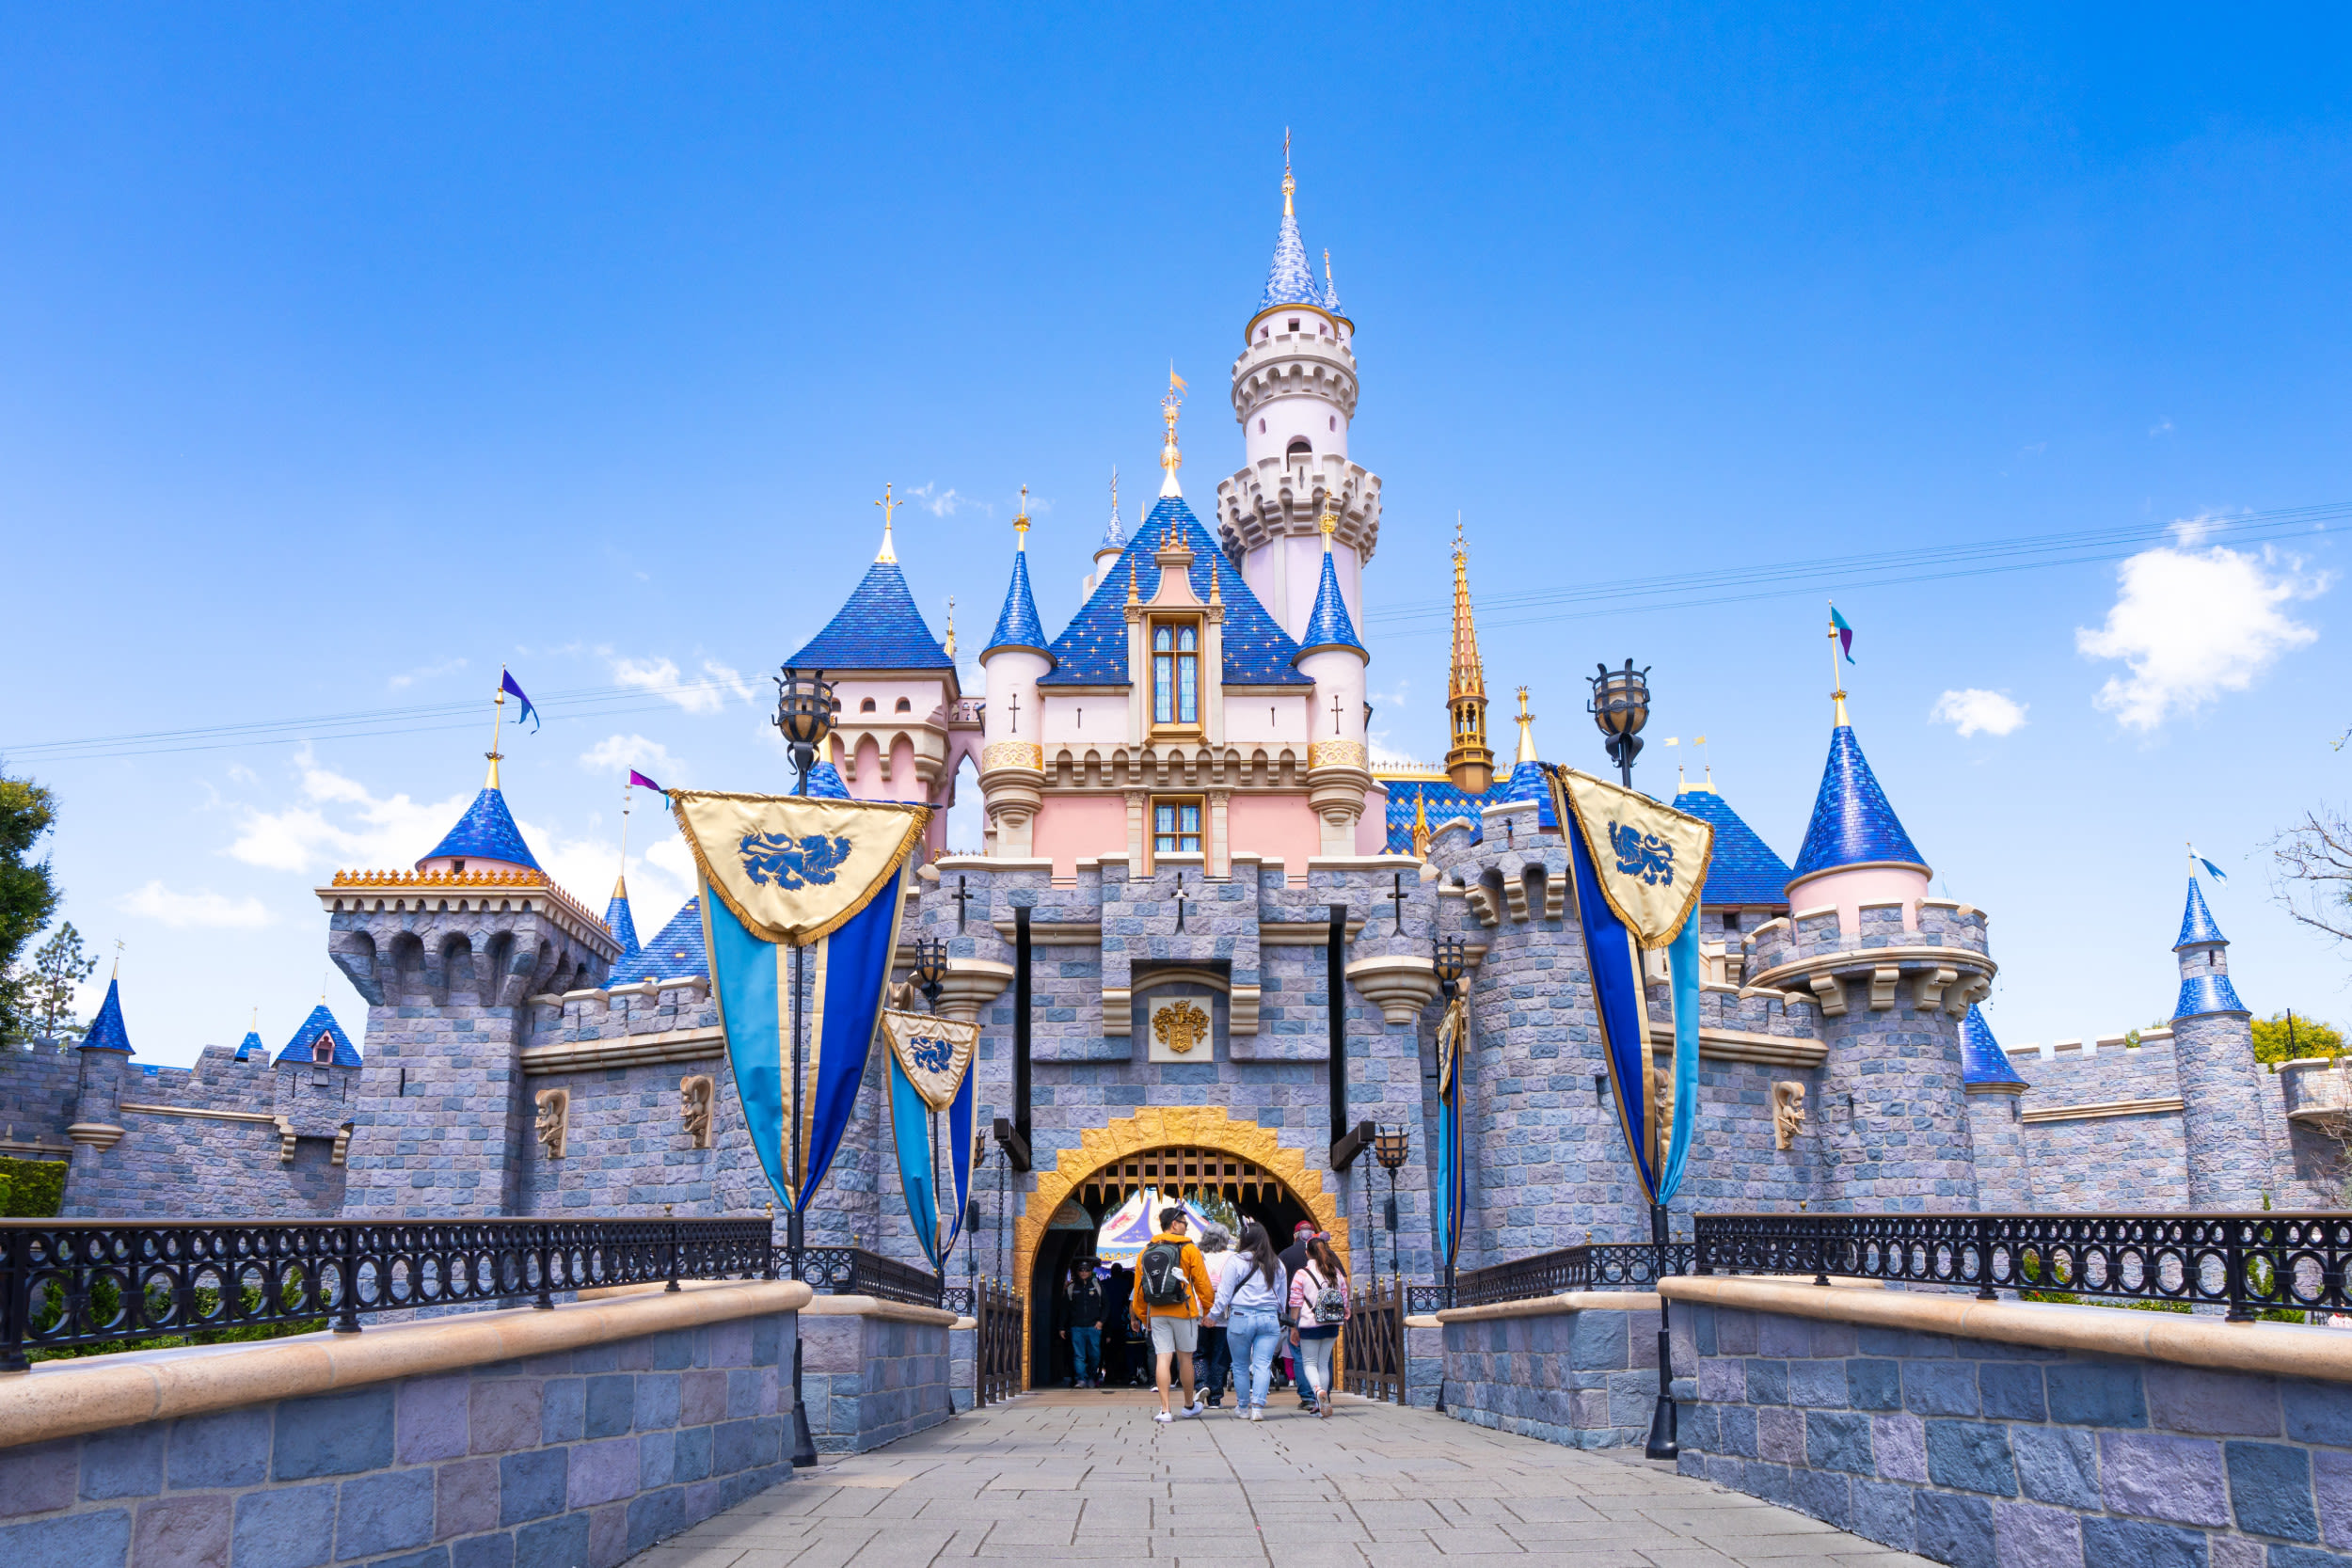 Disneyland gets approval for major California expansion